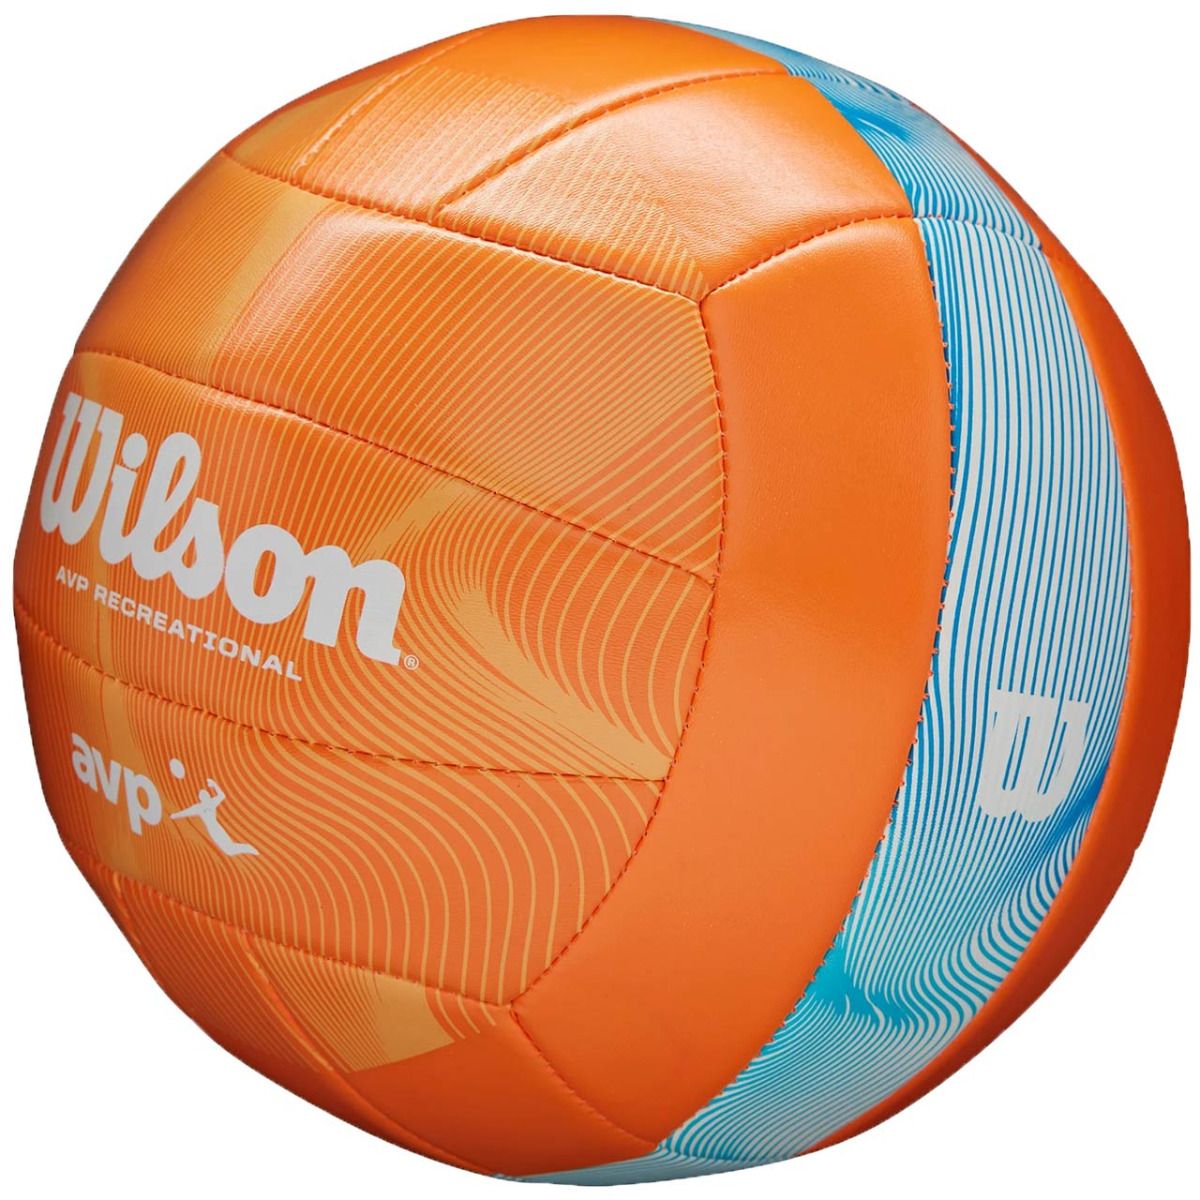 Wilson Volleyball Avp Movement VB WV4006801XBOF